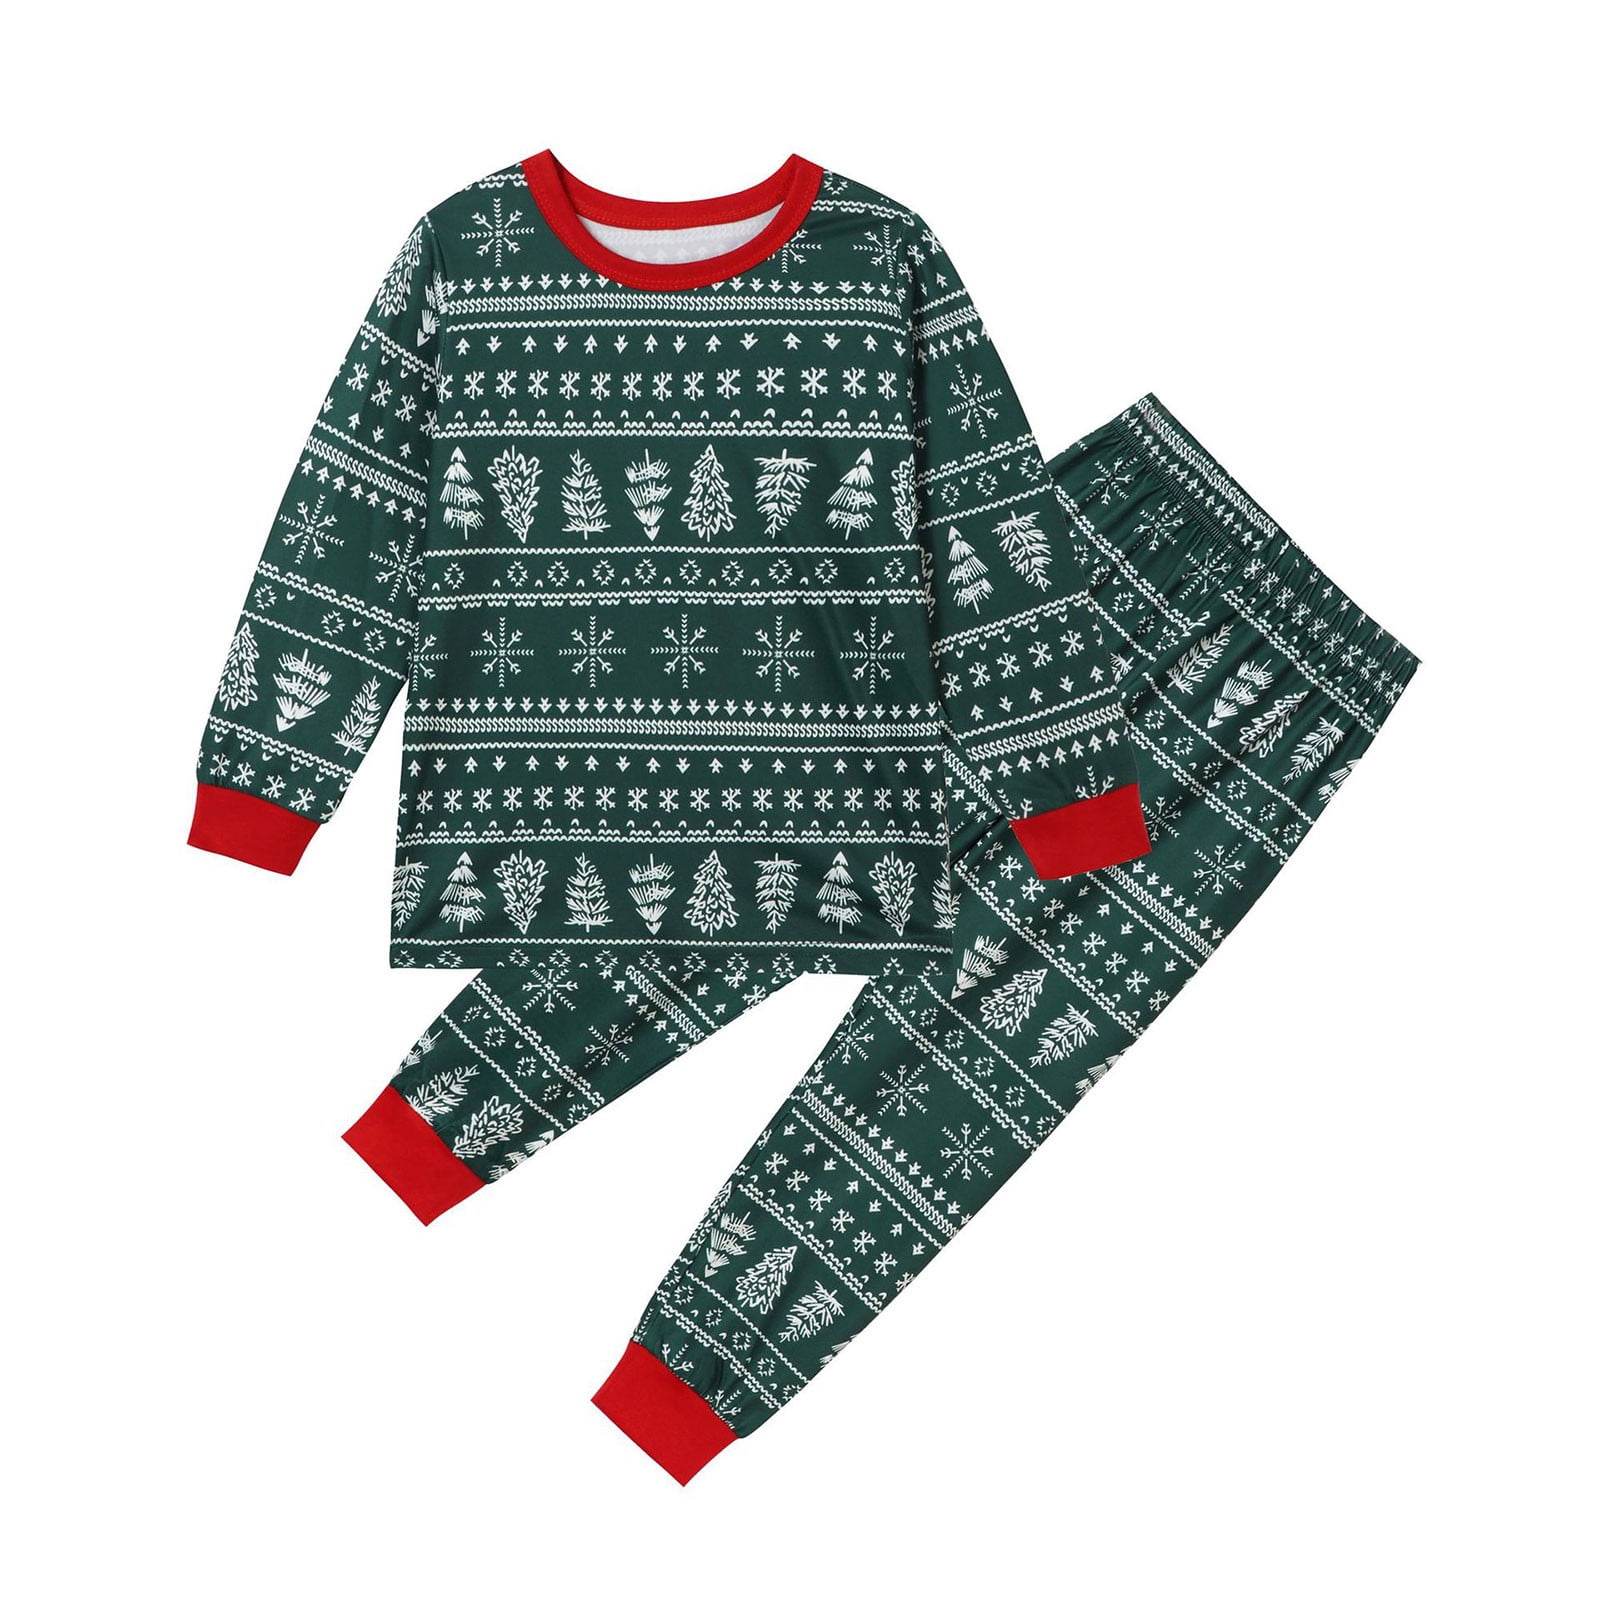 HAPIMO Sales Christmas Pajamas for Family, Basic Matching New Year Pjs Xmas  Casual Sleepwear Sets Green 2-3Y